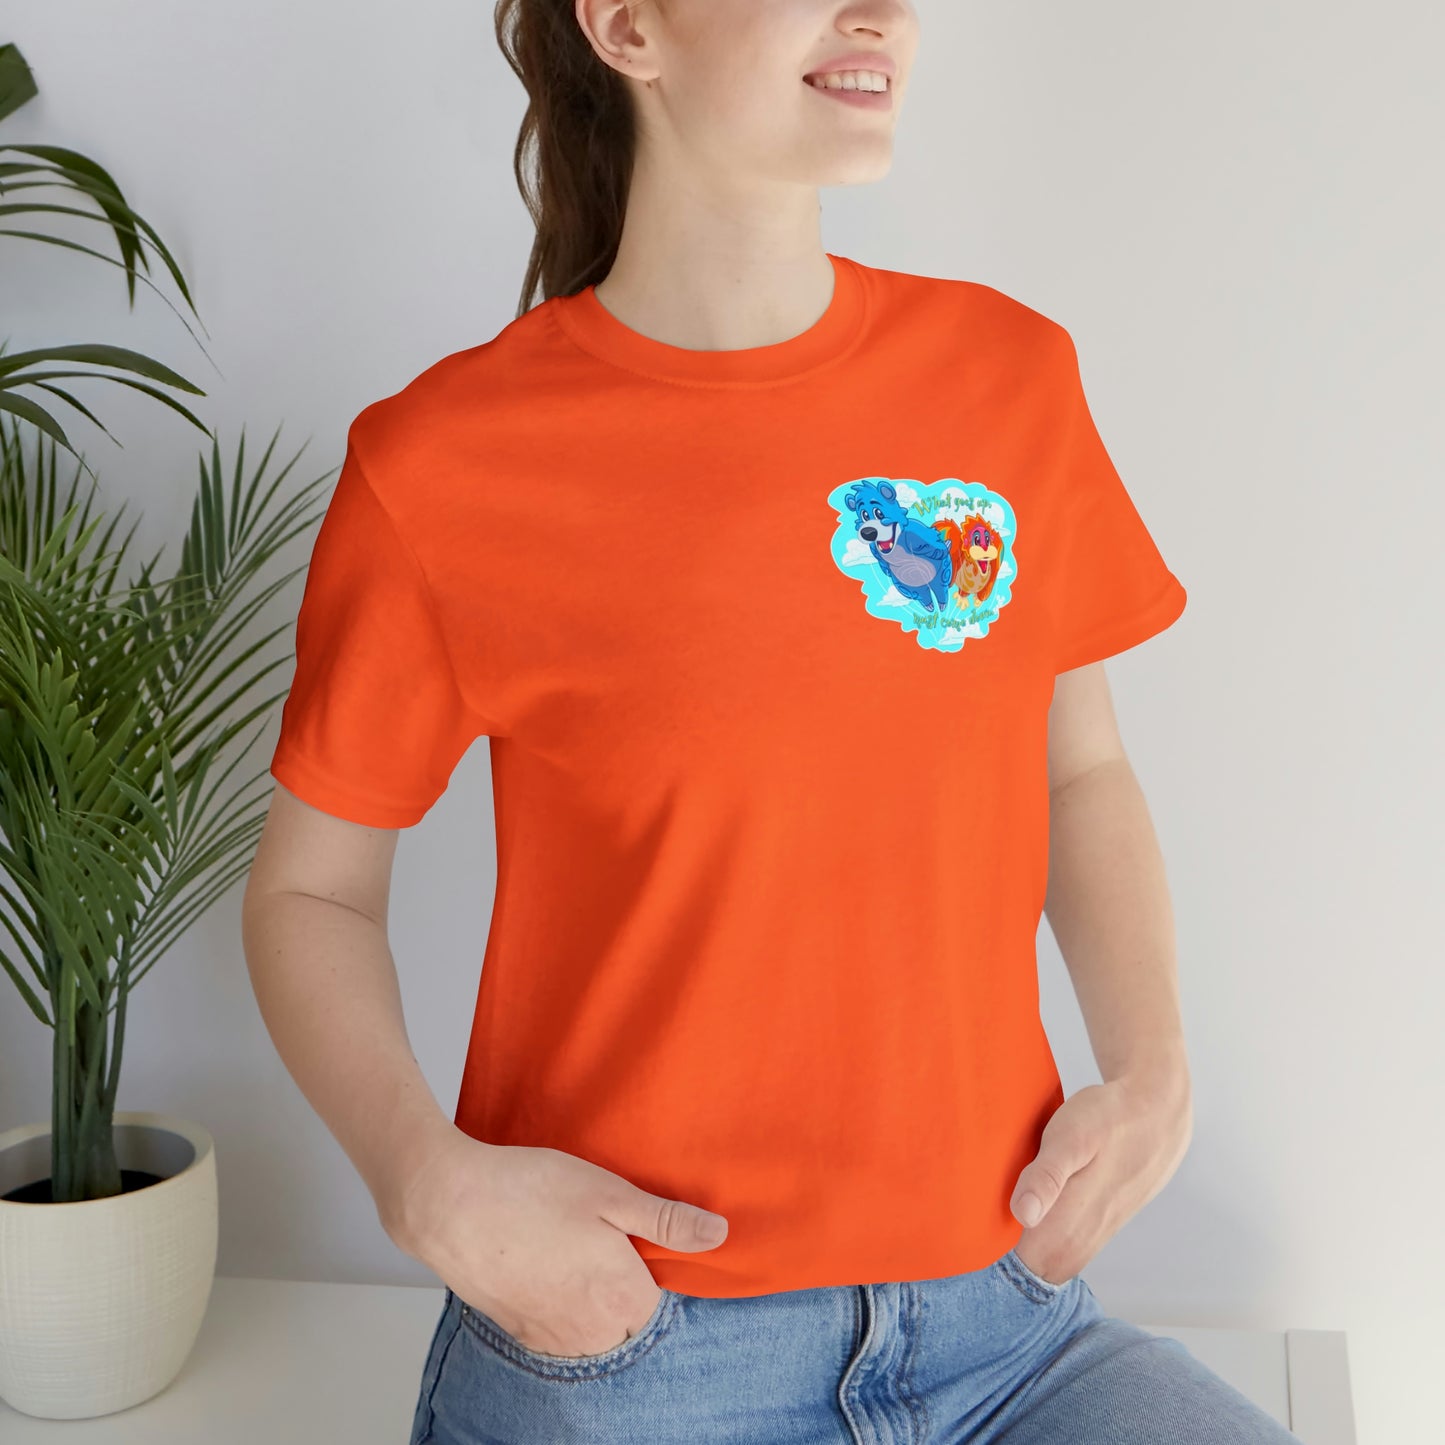 Jungle Book shirt Kite Tails Orange